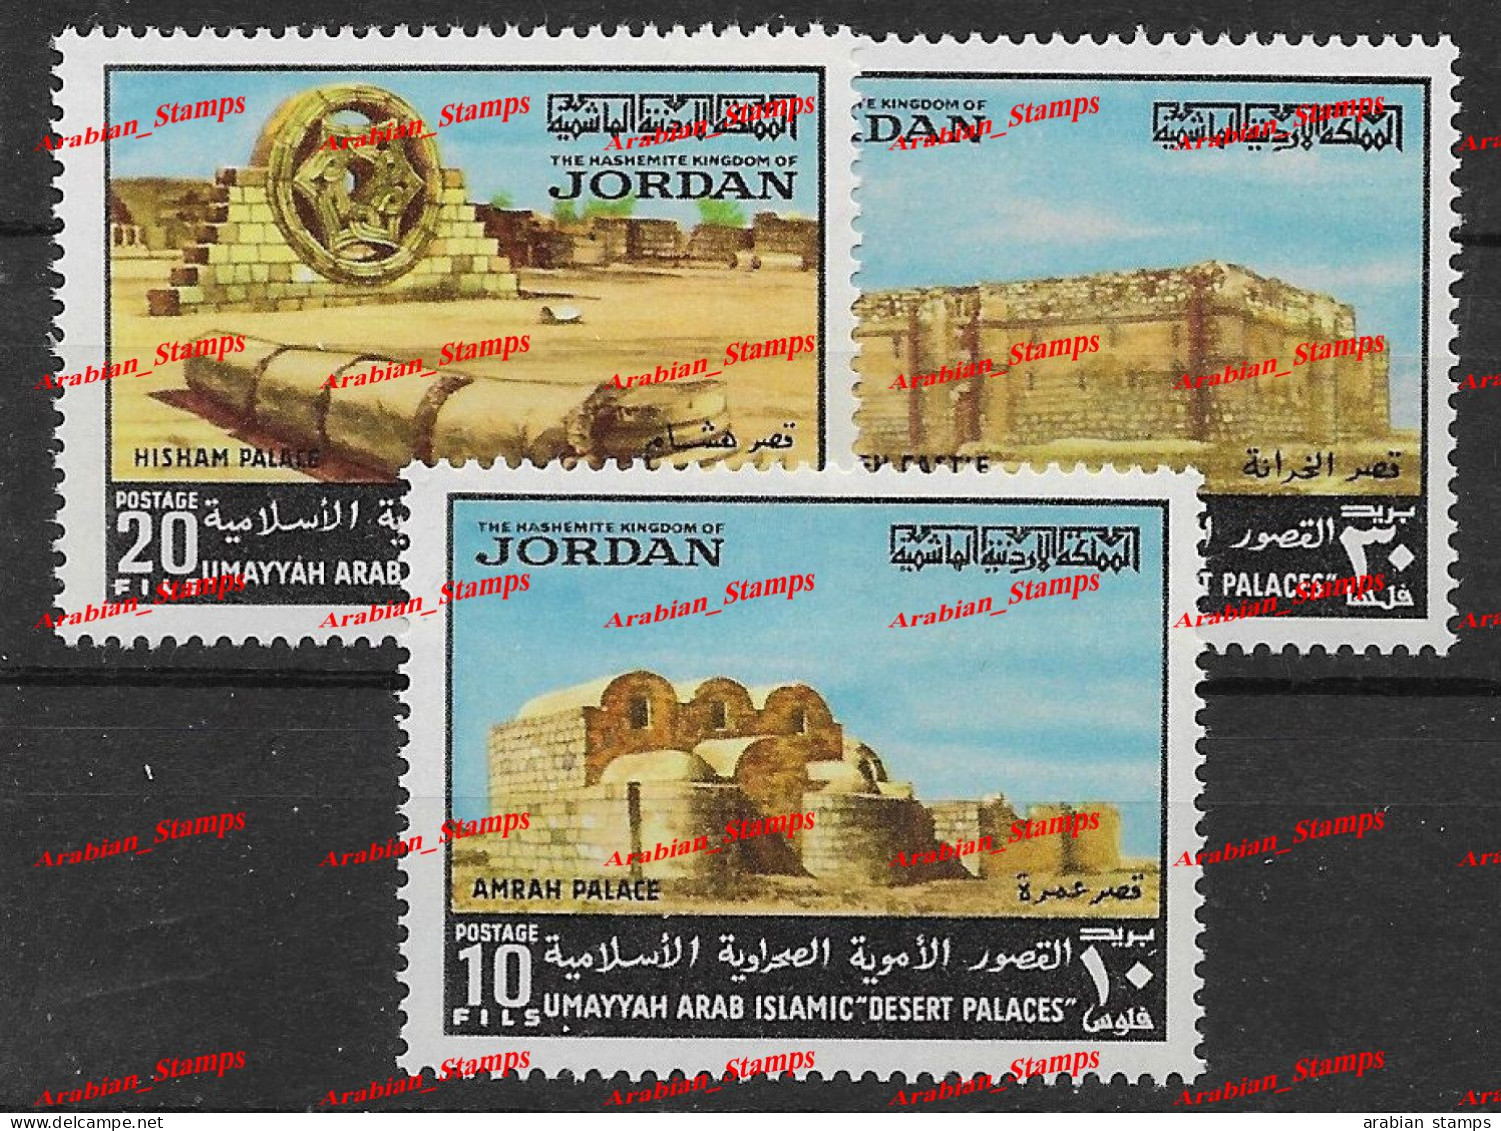 HASHIMATE KINGDOM OF JORDAN JORDANIE 1974 MNH DESERT RUINS DESERT PALACES MONUMENTS AMRA PALACE KHARRANEH CASTLE - Jordanien